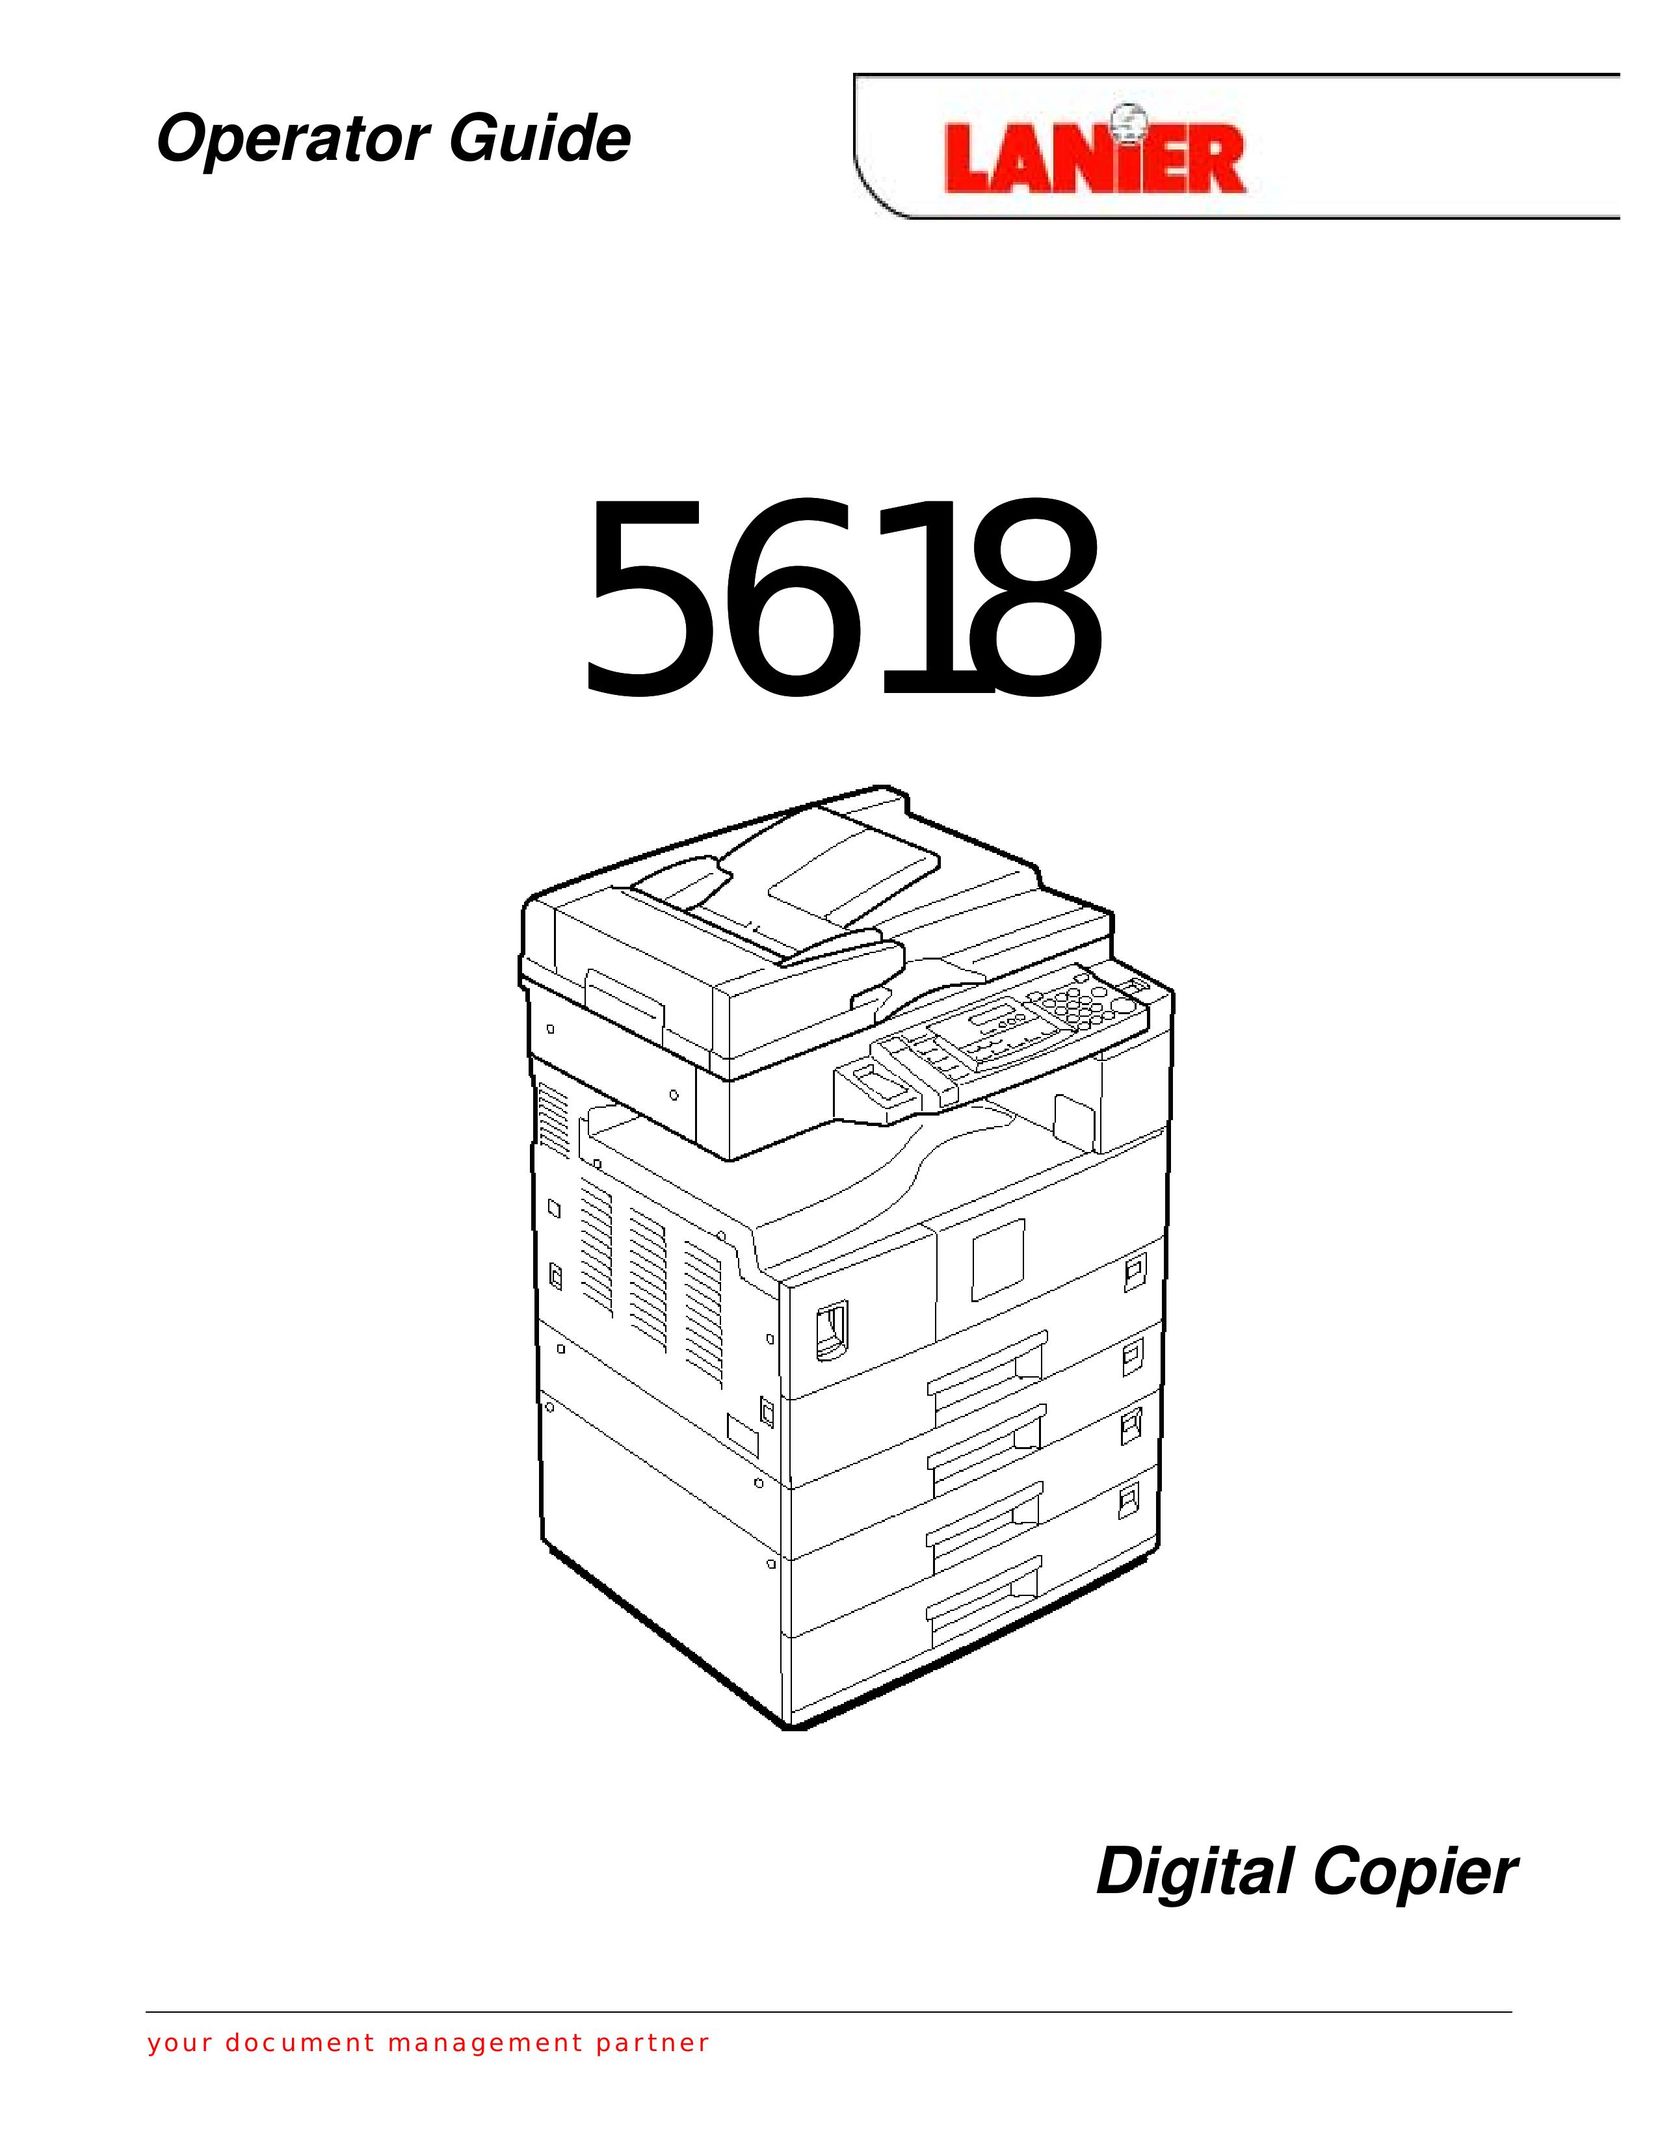 Lanier 5618 Copier User Manual